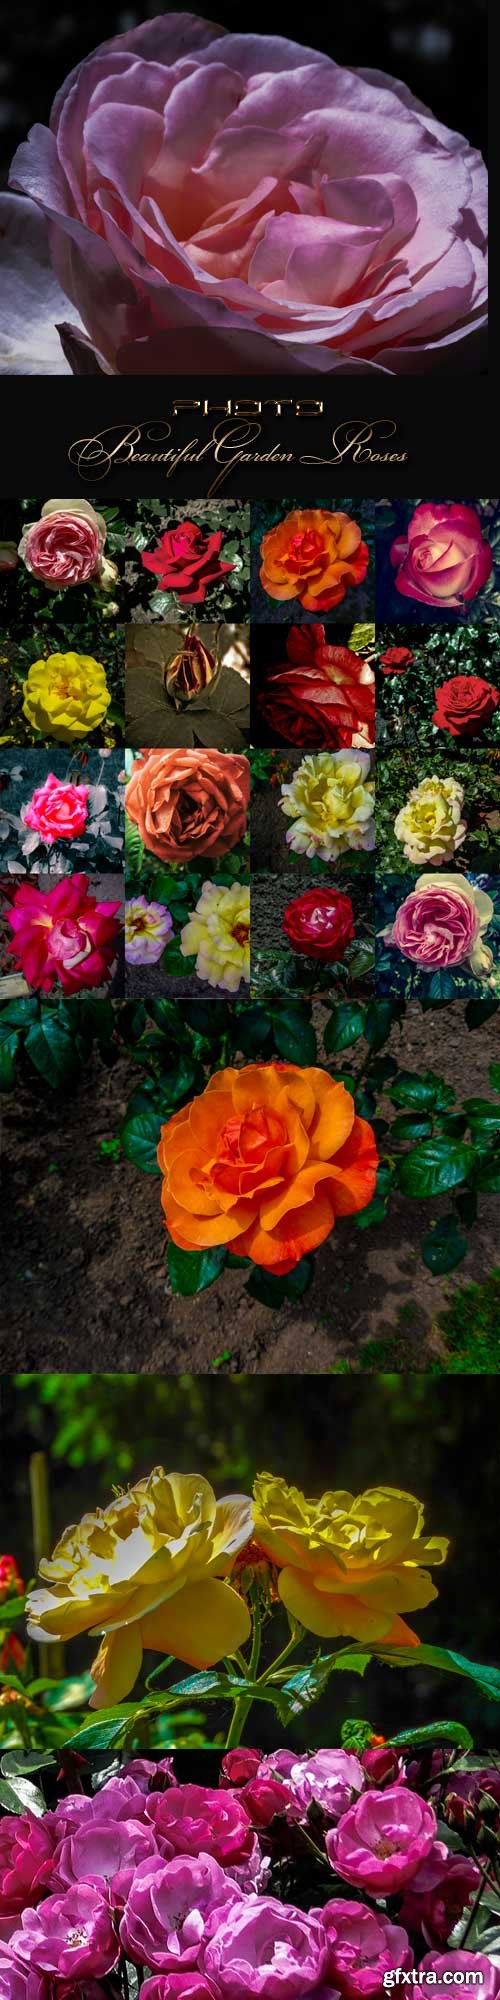 Beautiful garden rose raster graphics